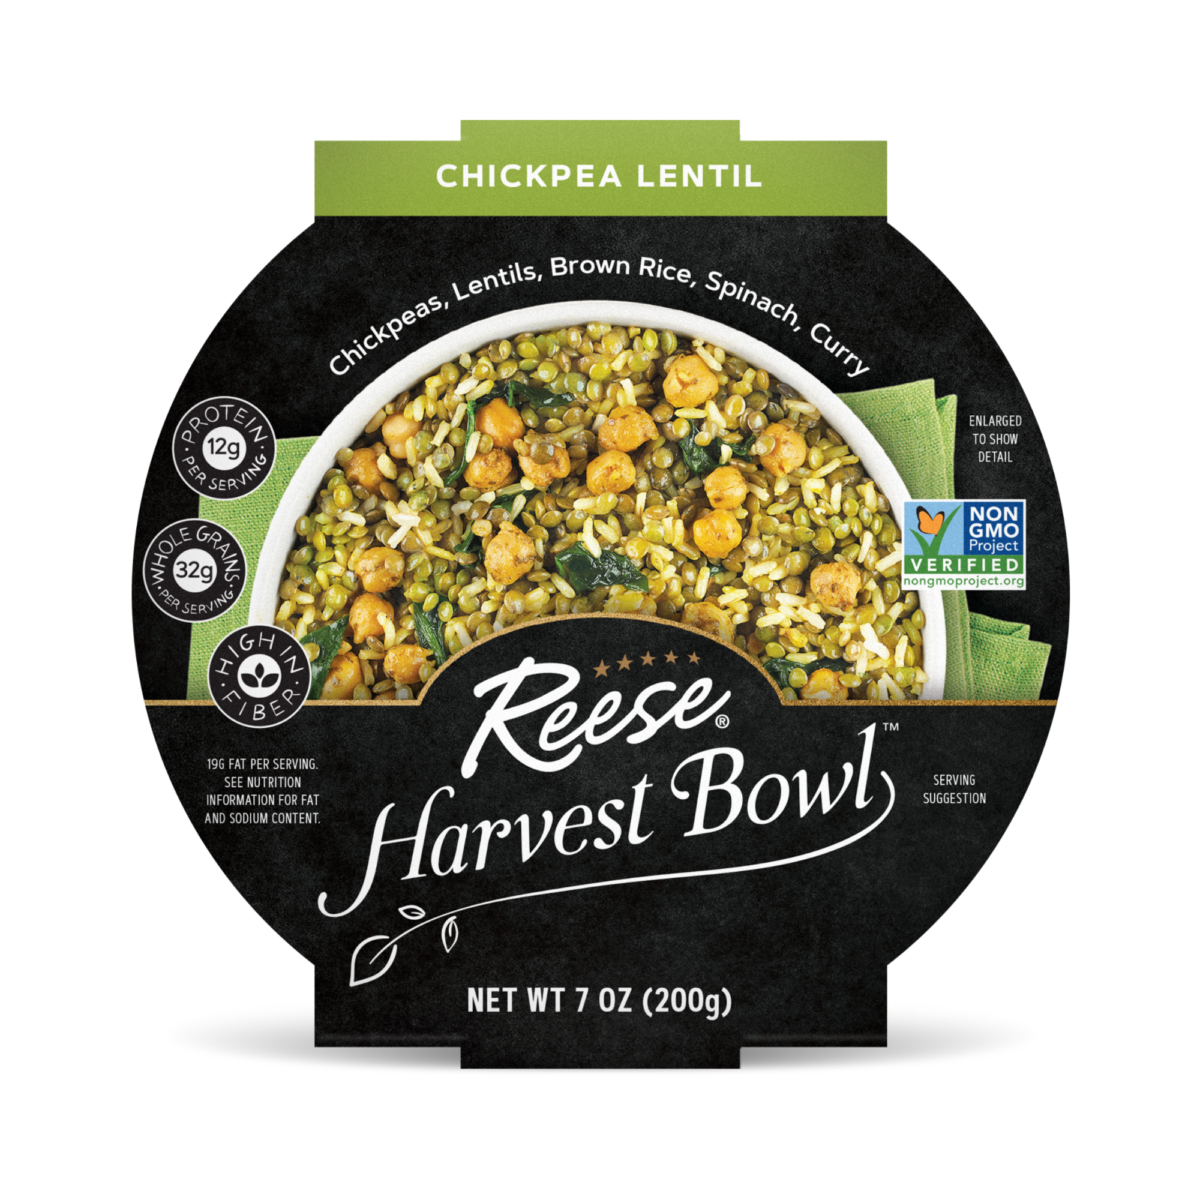 Lentil Harvest Bowl